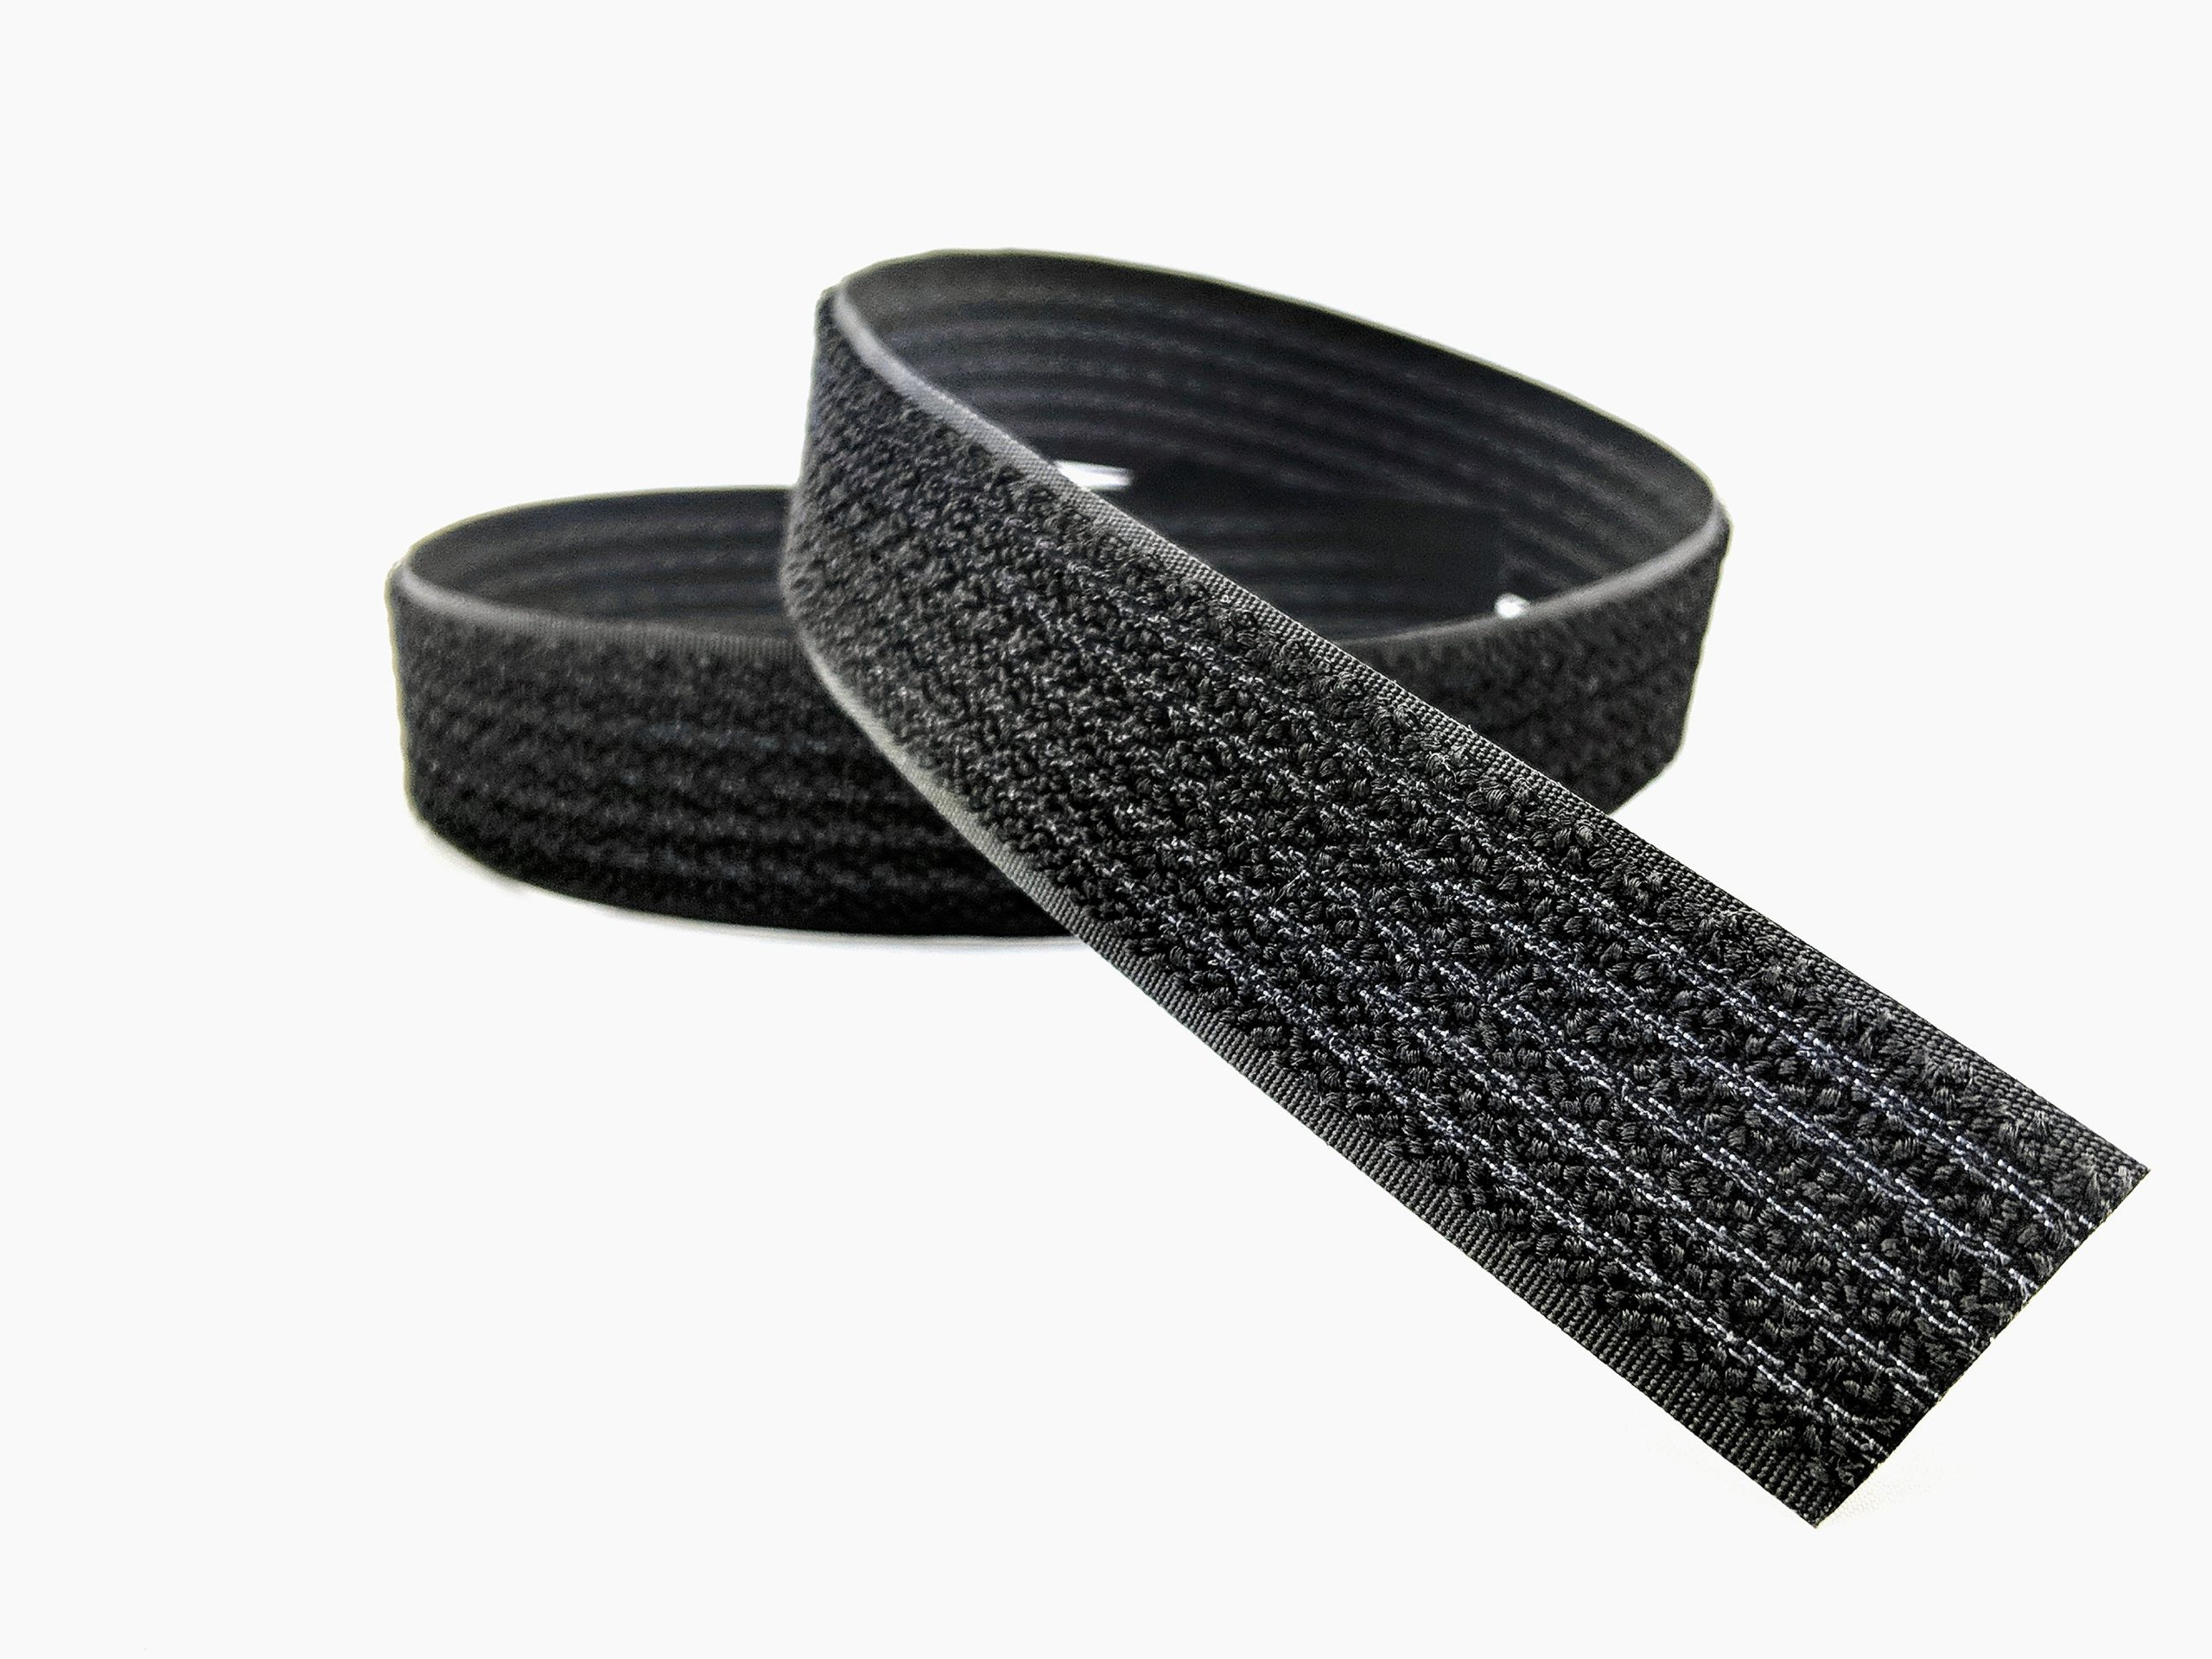 Metal hook and loop fastener, tougher than Velcro - CNET